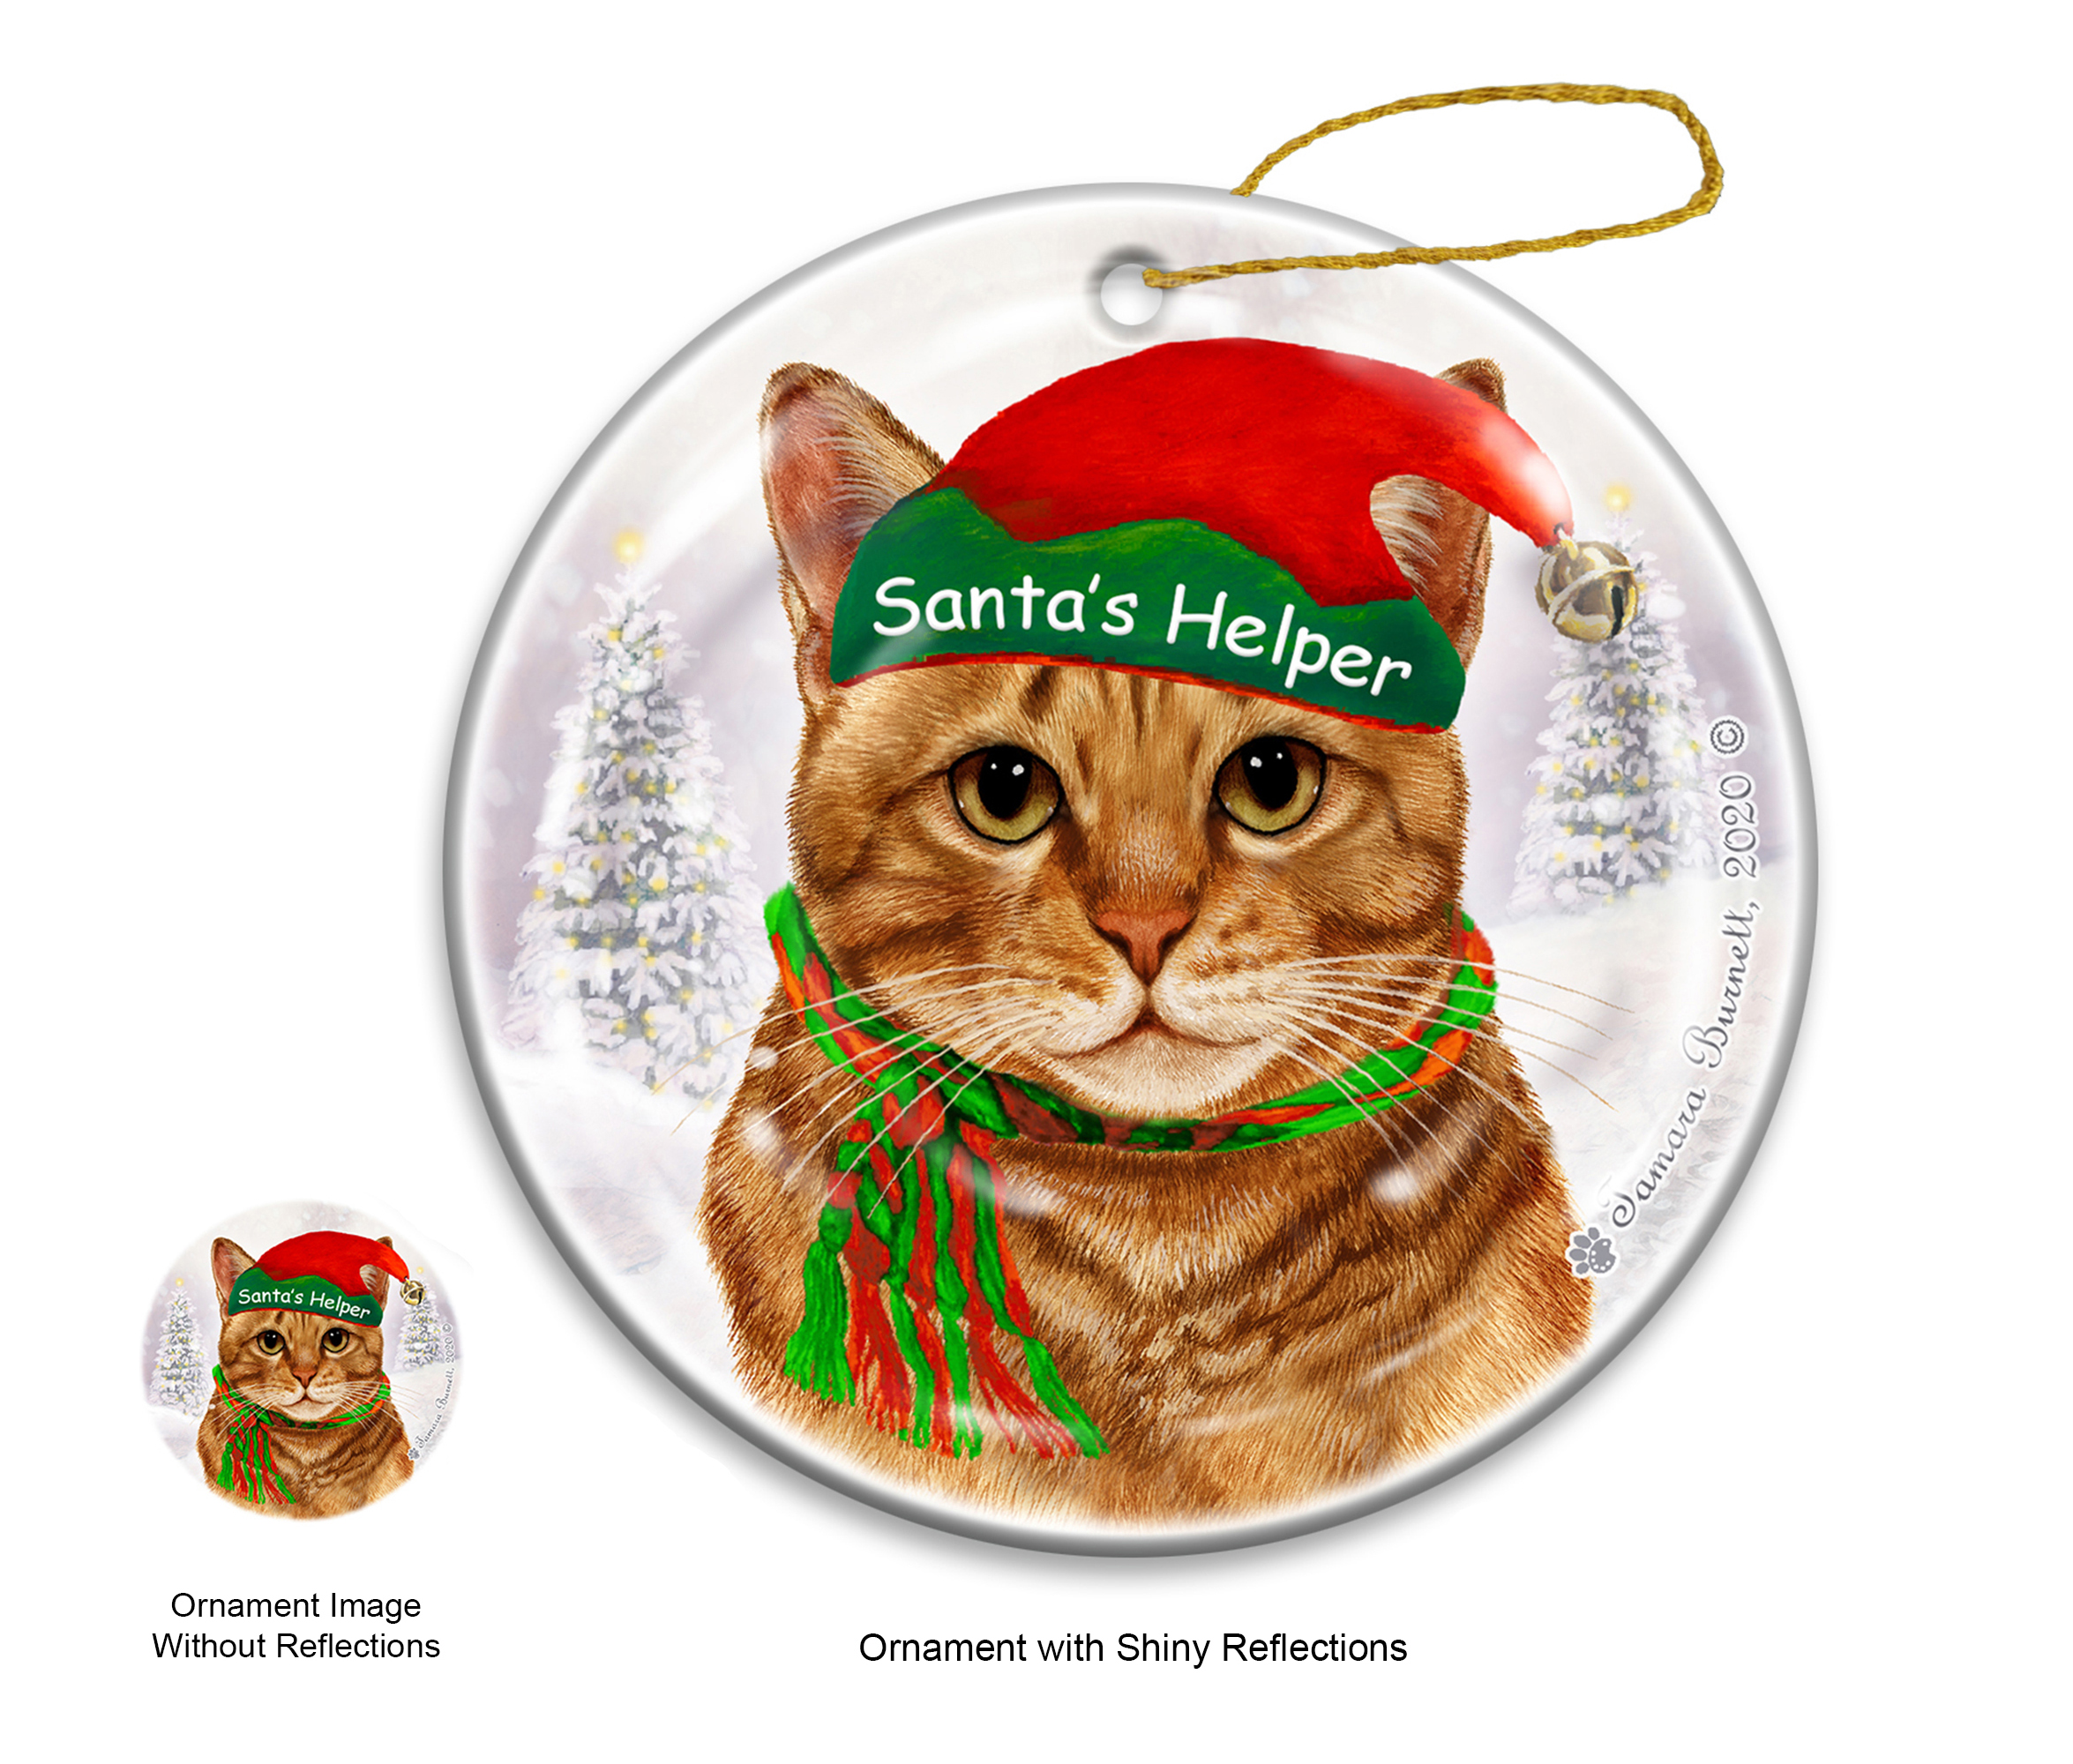 Orange Tabby Cat - Santa's Helper Ornament Image